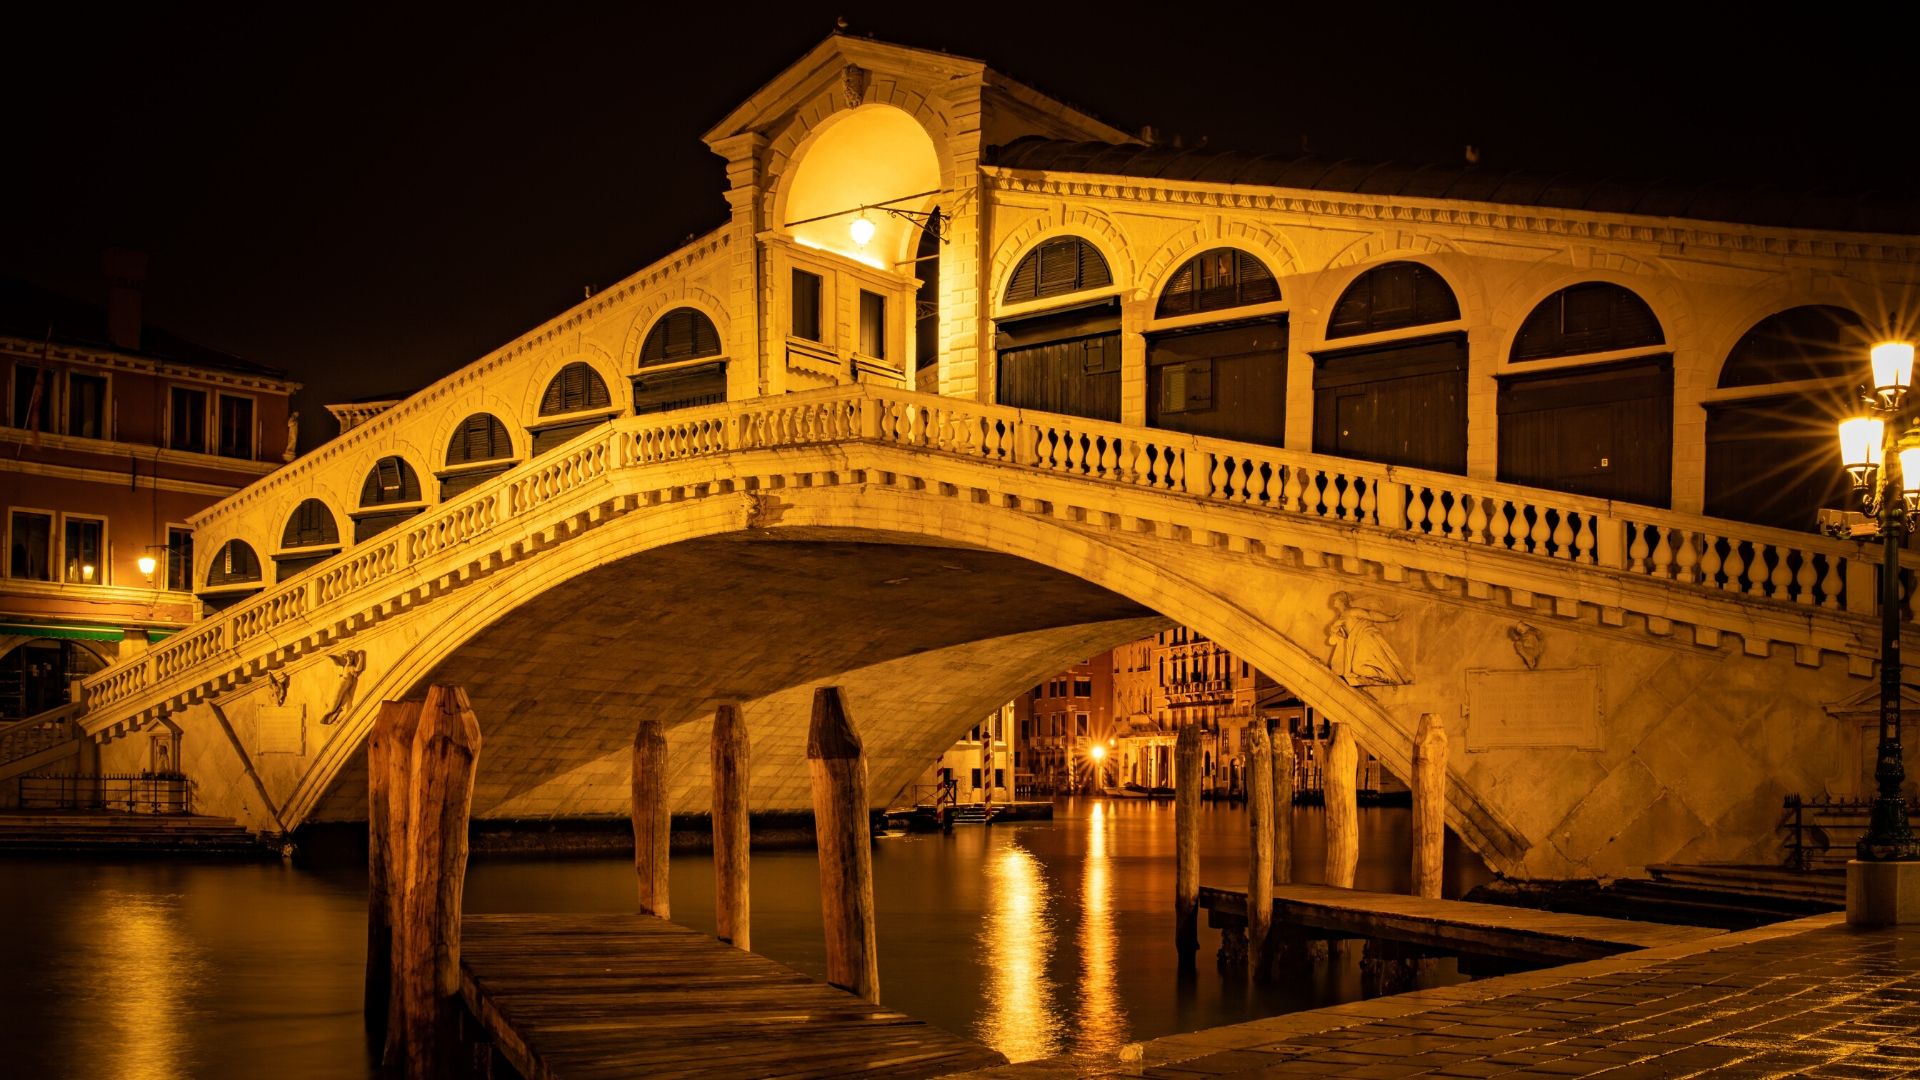 Rialto Bridge: The Oldest Bridge on Venice’s Grand Canal